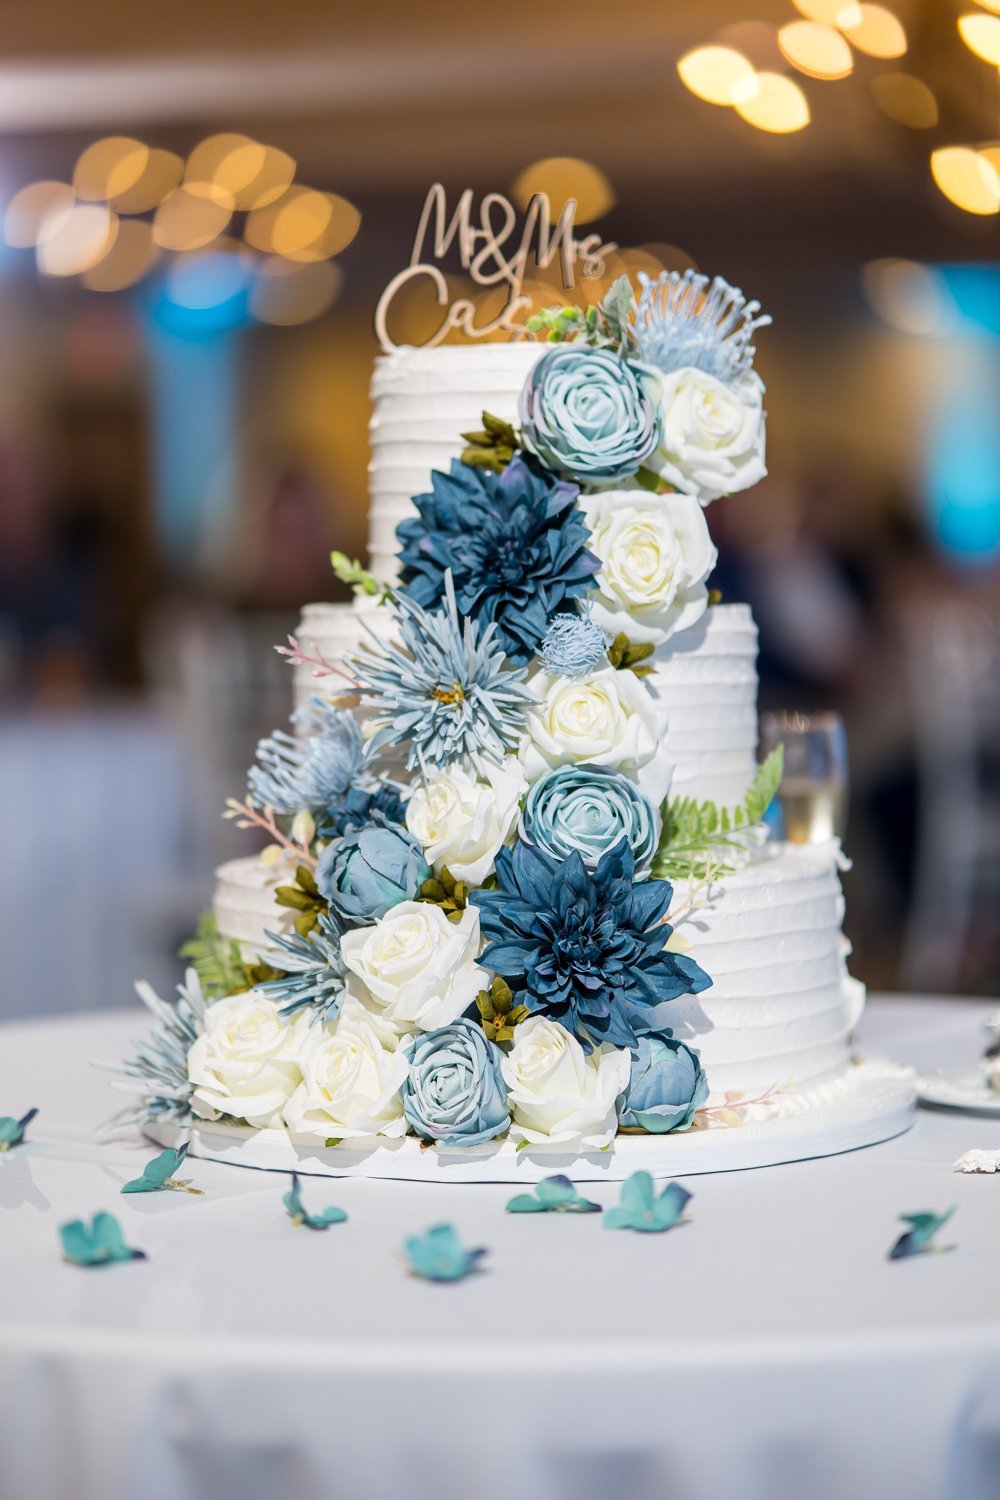 www.santabarbarawedding.com | Elizabeth Victoria | Hilton Mandalay Beach Hotel | Three Sisters Event Planning | Blooming Ruby’s | Heavenly Cakes 805 | Three Tiered Wedding Cake with Blue Flowers